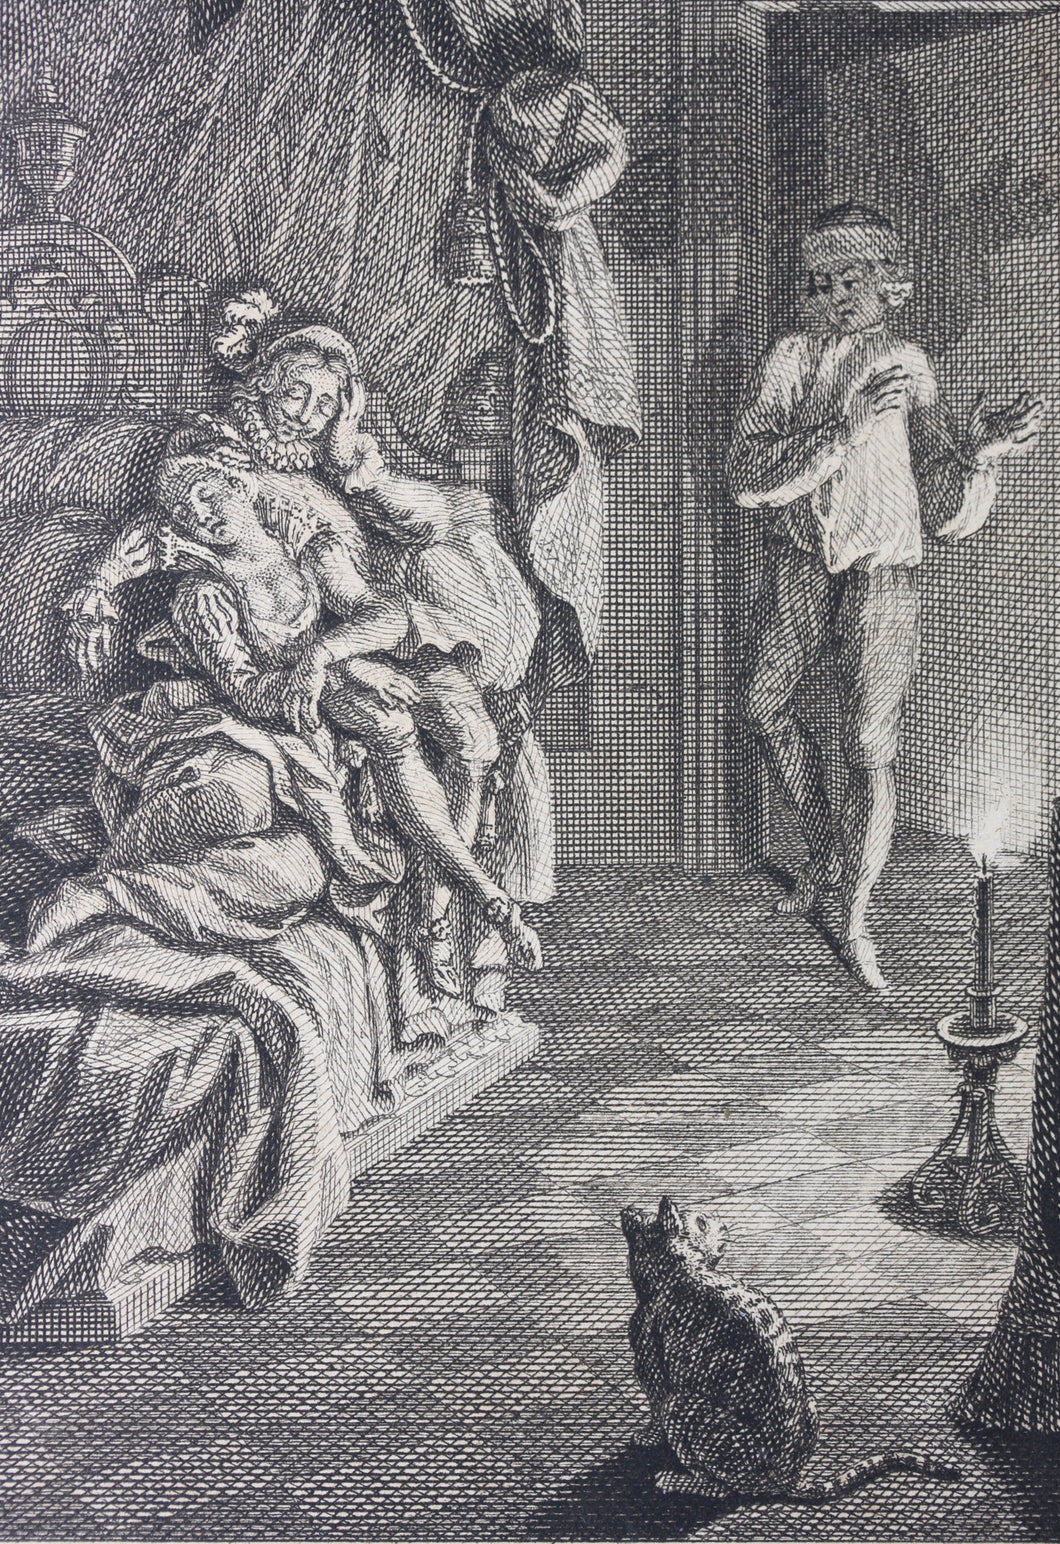 Jacob Folkema. The Jealous Extremaduran. Illustration to Exemplary Novels by Miguel de Cervantes. Engraving. 1739.